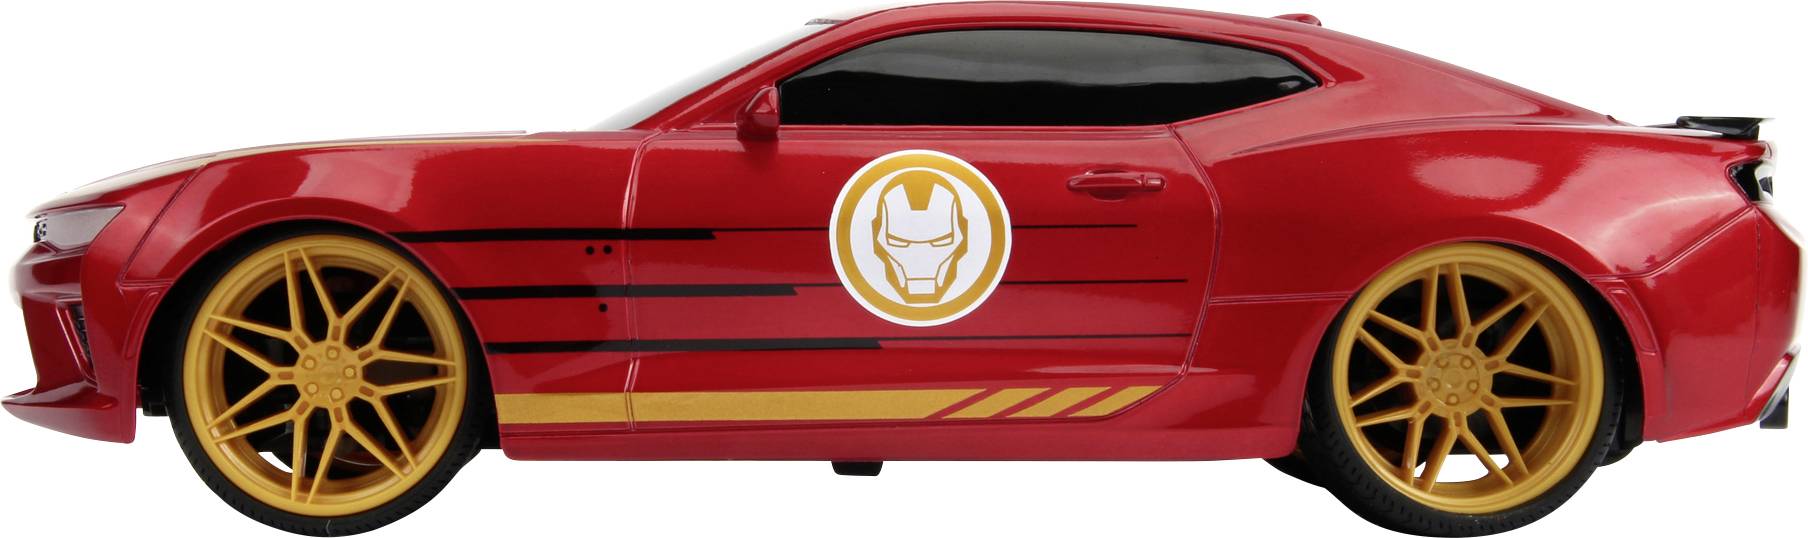 Jada Toys 253226000 Marvel Avengers Iron Man RC 2016 Chevy Camaro 1:16 